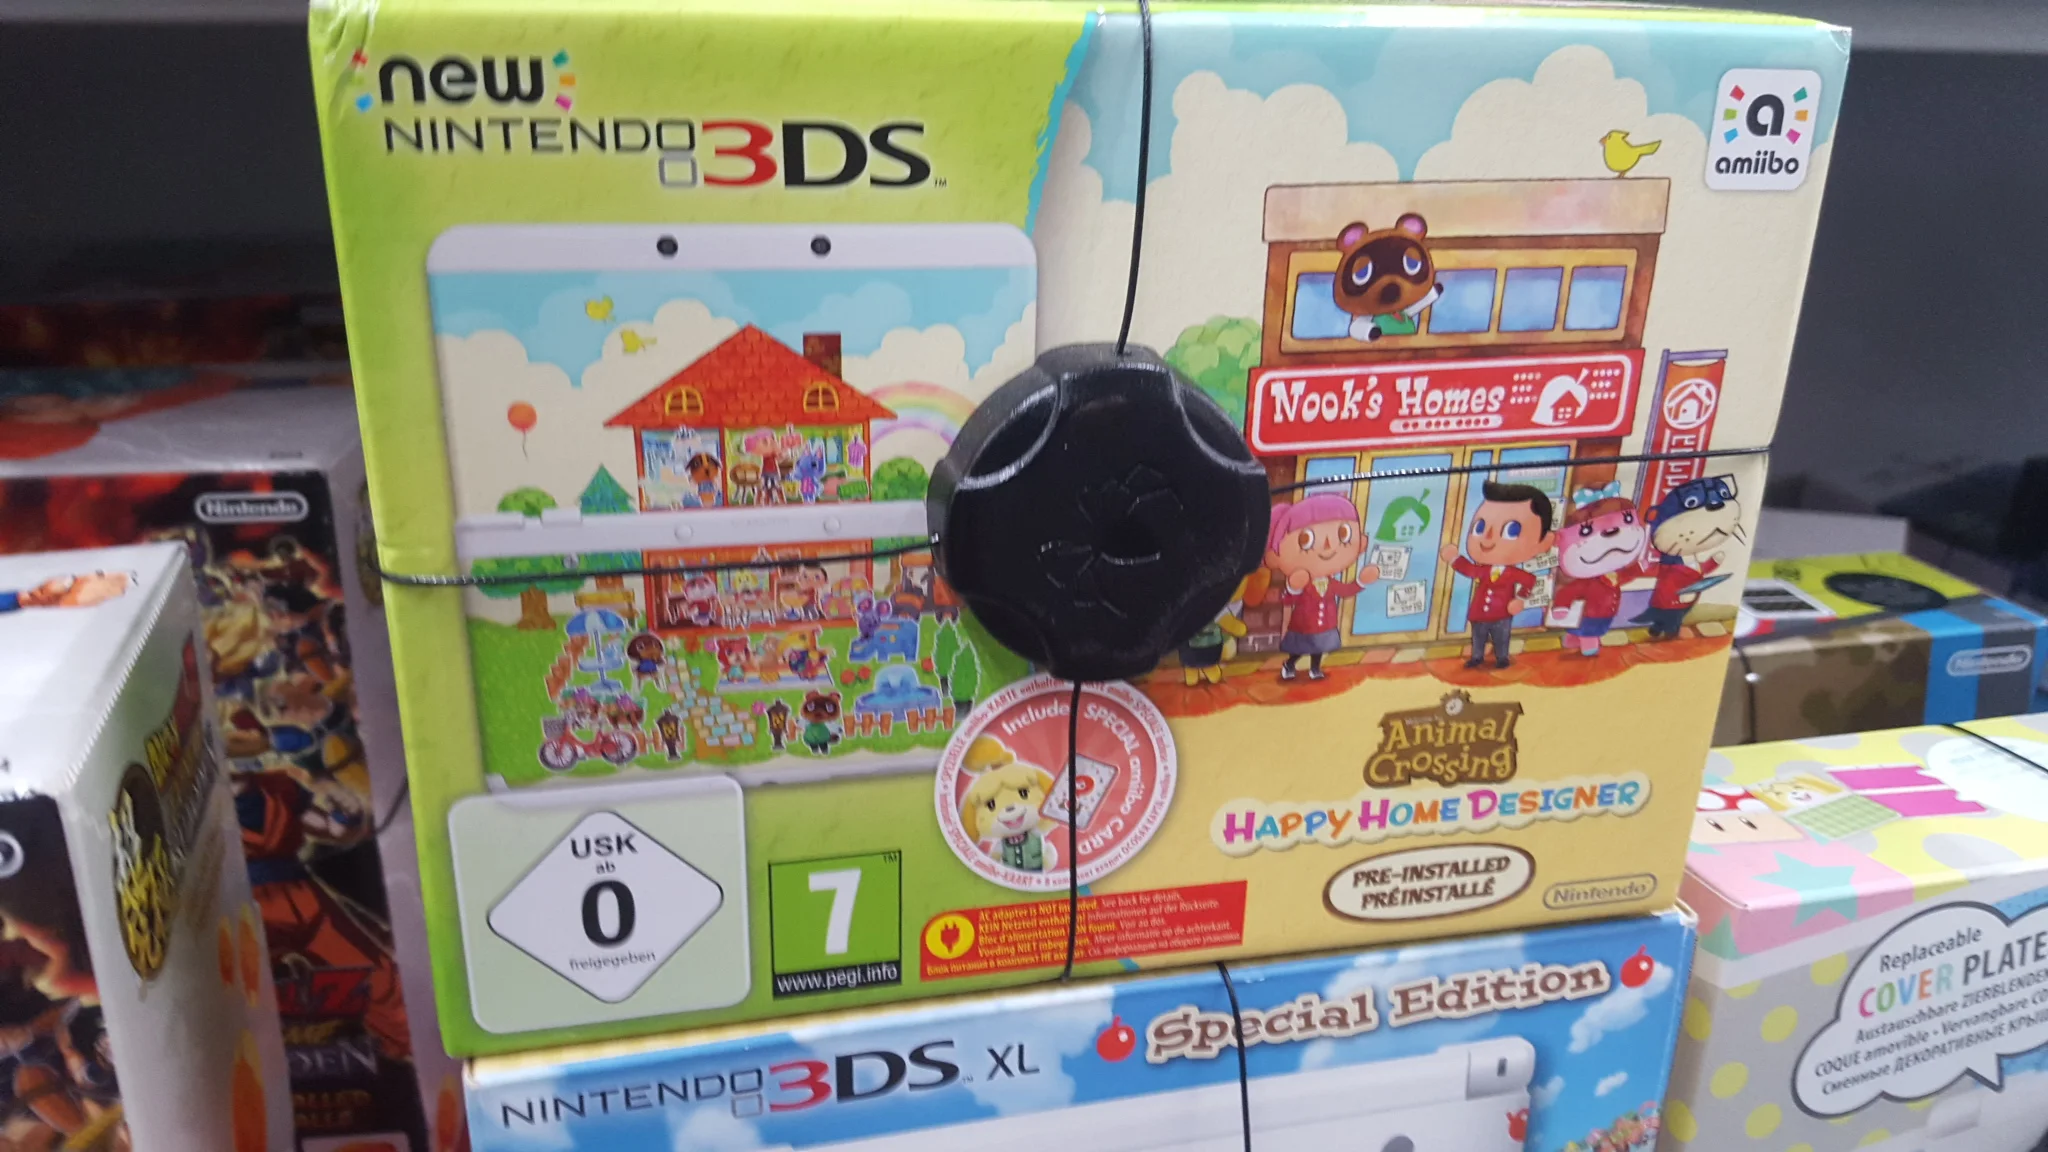  New Nintendo 3DS Animal Crossing Happy Home Designer Console [EU]